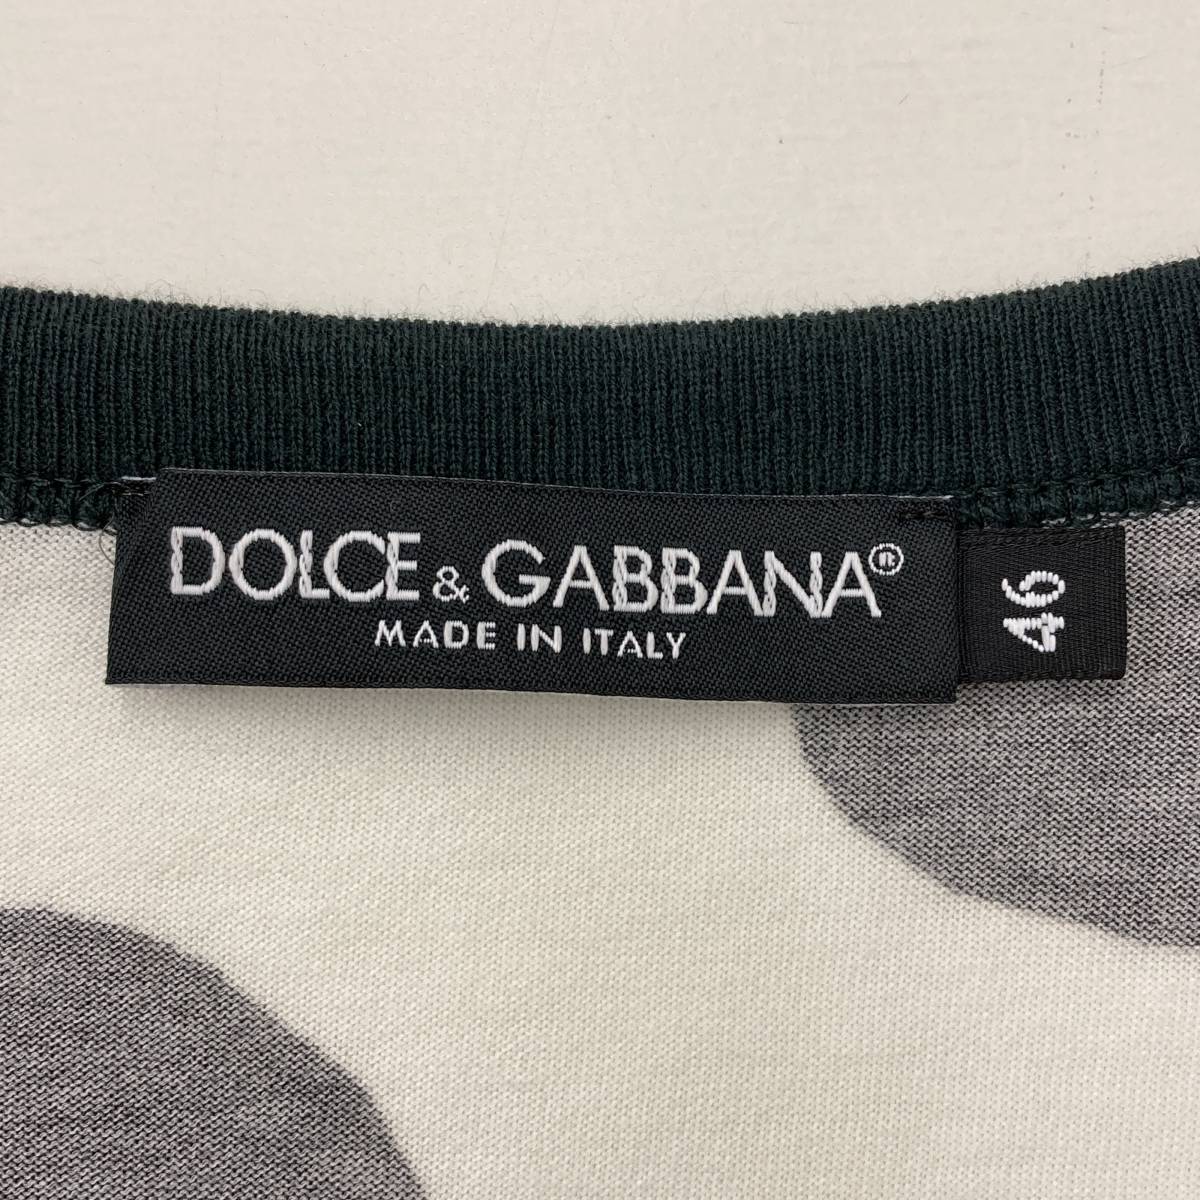 DOLCE&GABBANA 総柄 半袖 Tシャツ Vネック イタリア製 メンズ 46サイズ ドルチェ&ガッバーナ ドルガバ D&G カットソー 3040143_画像4